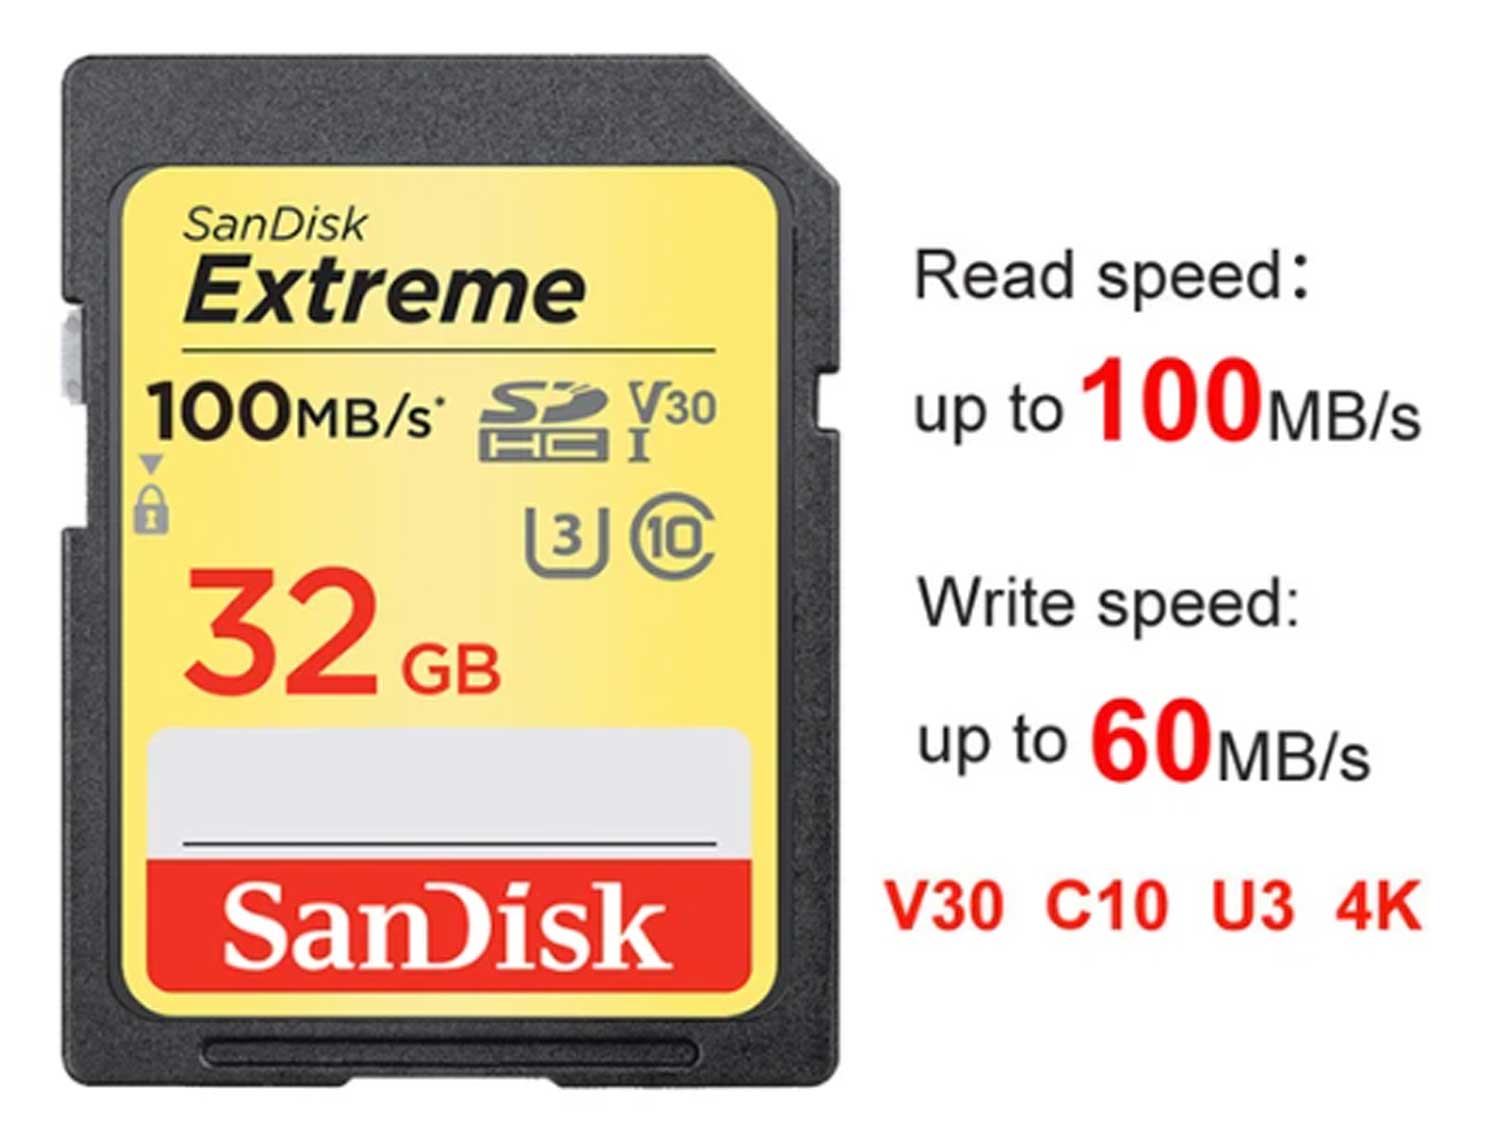 SanDisk 32GB Extreme Memory Card